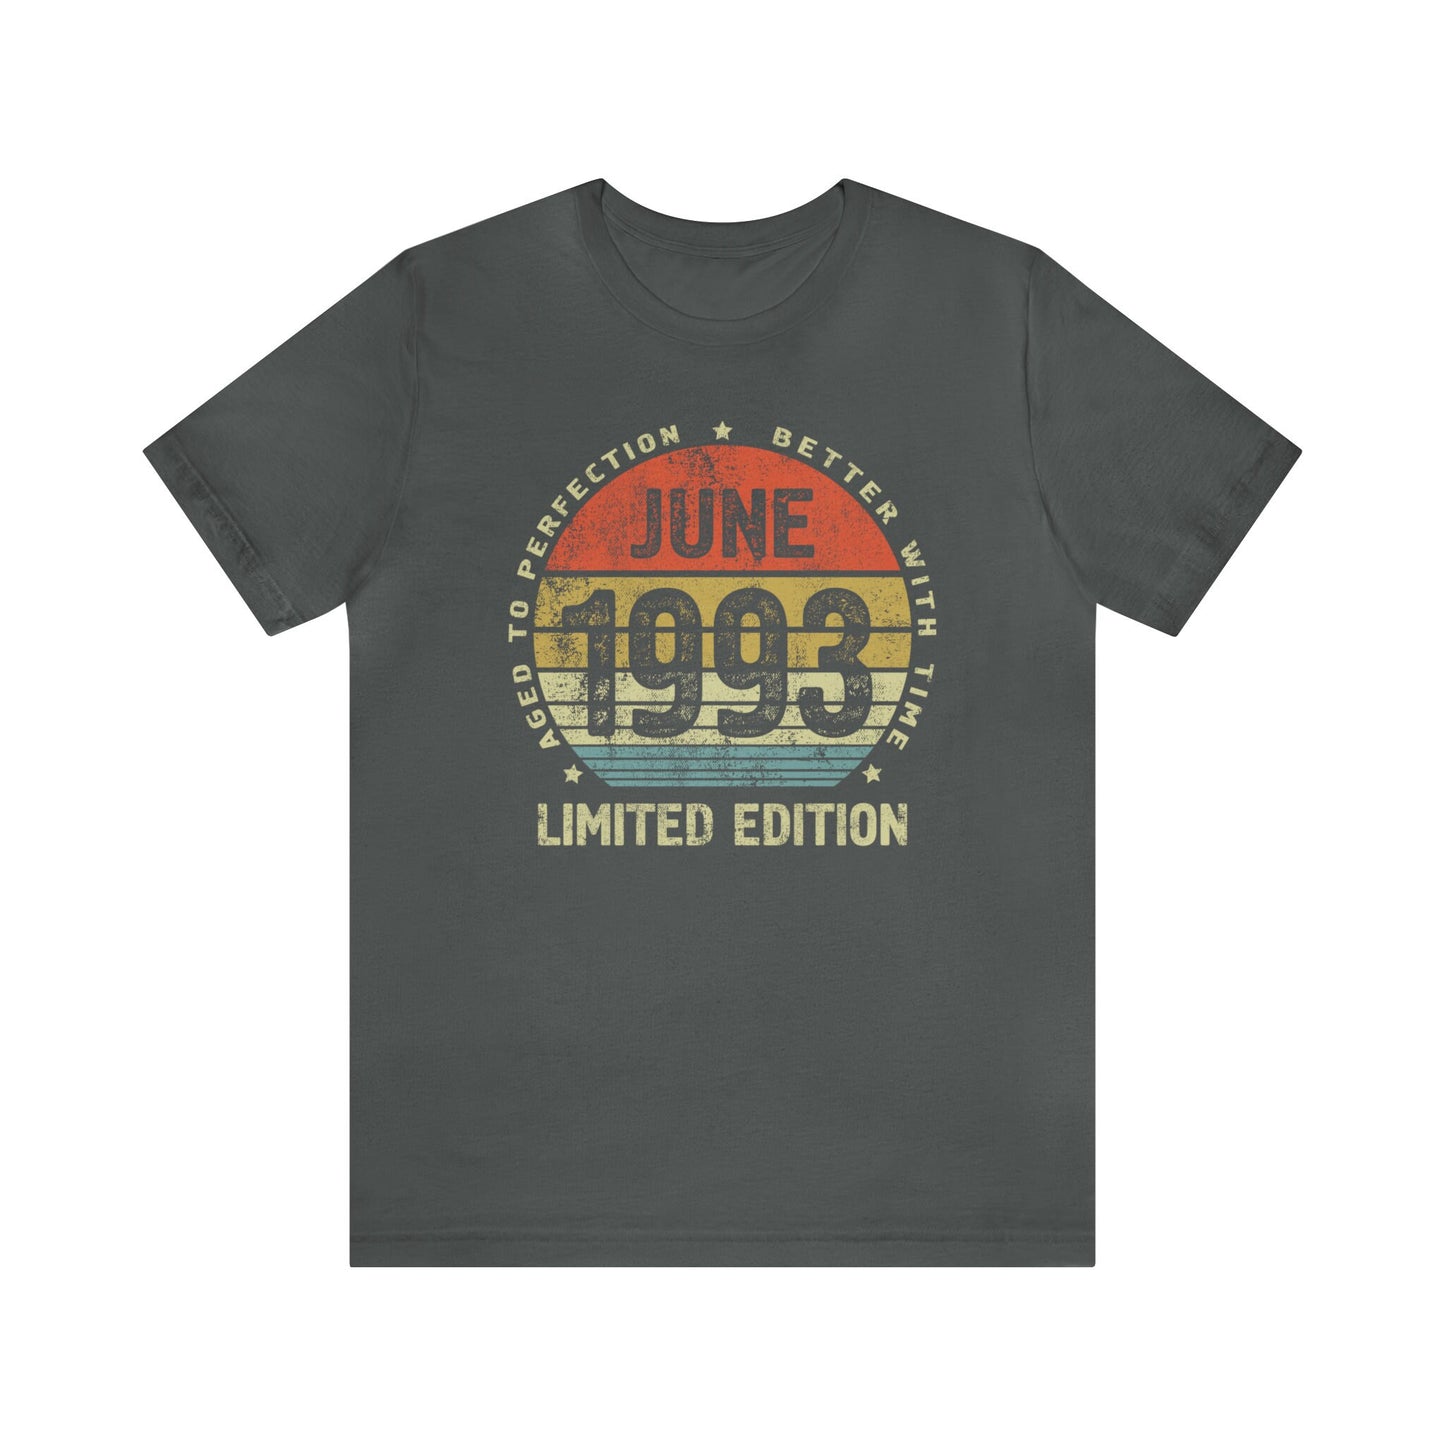 June 1993 birthday gift t-shirt for women or men,  birthday shirt for sister or brother